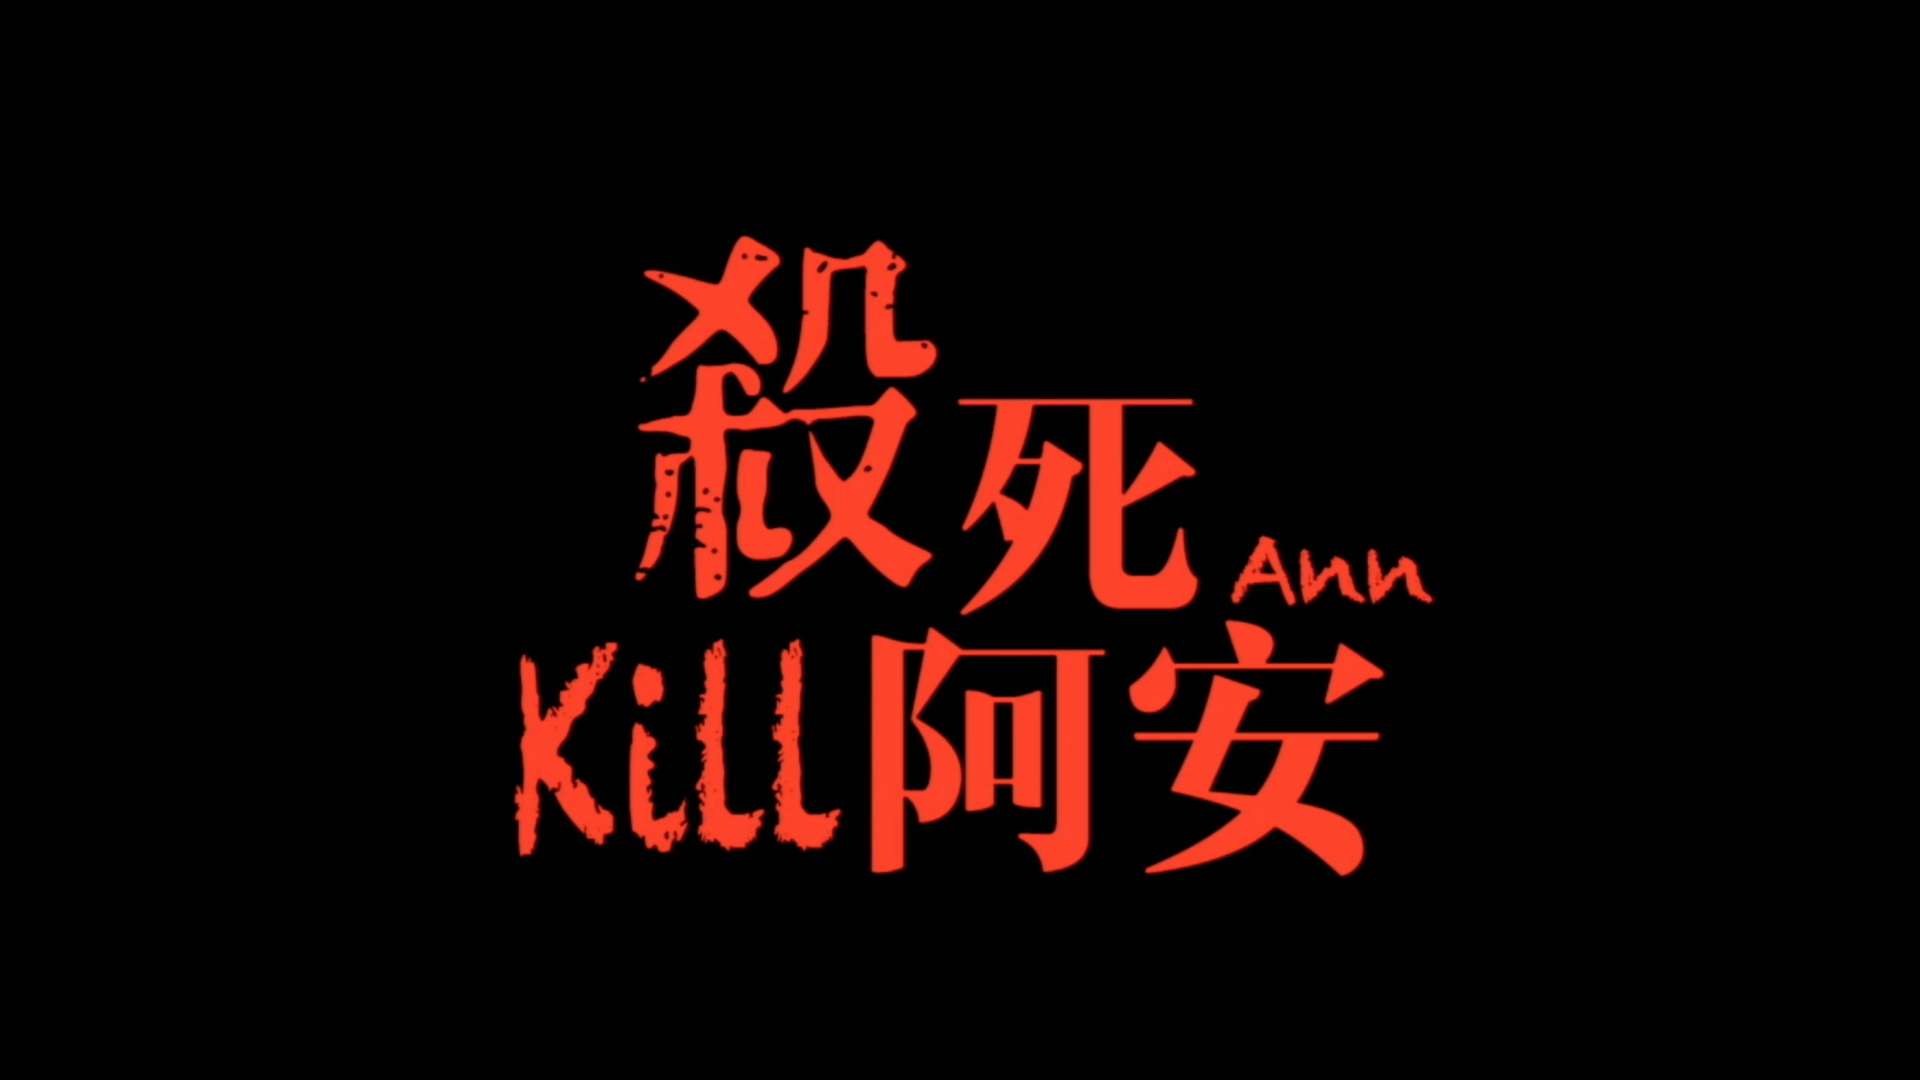 KILL ANN 杀死阿安